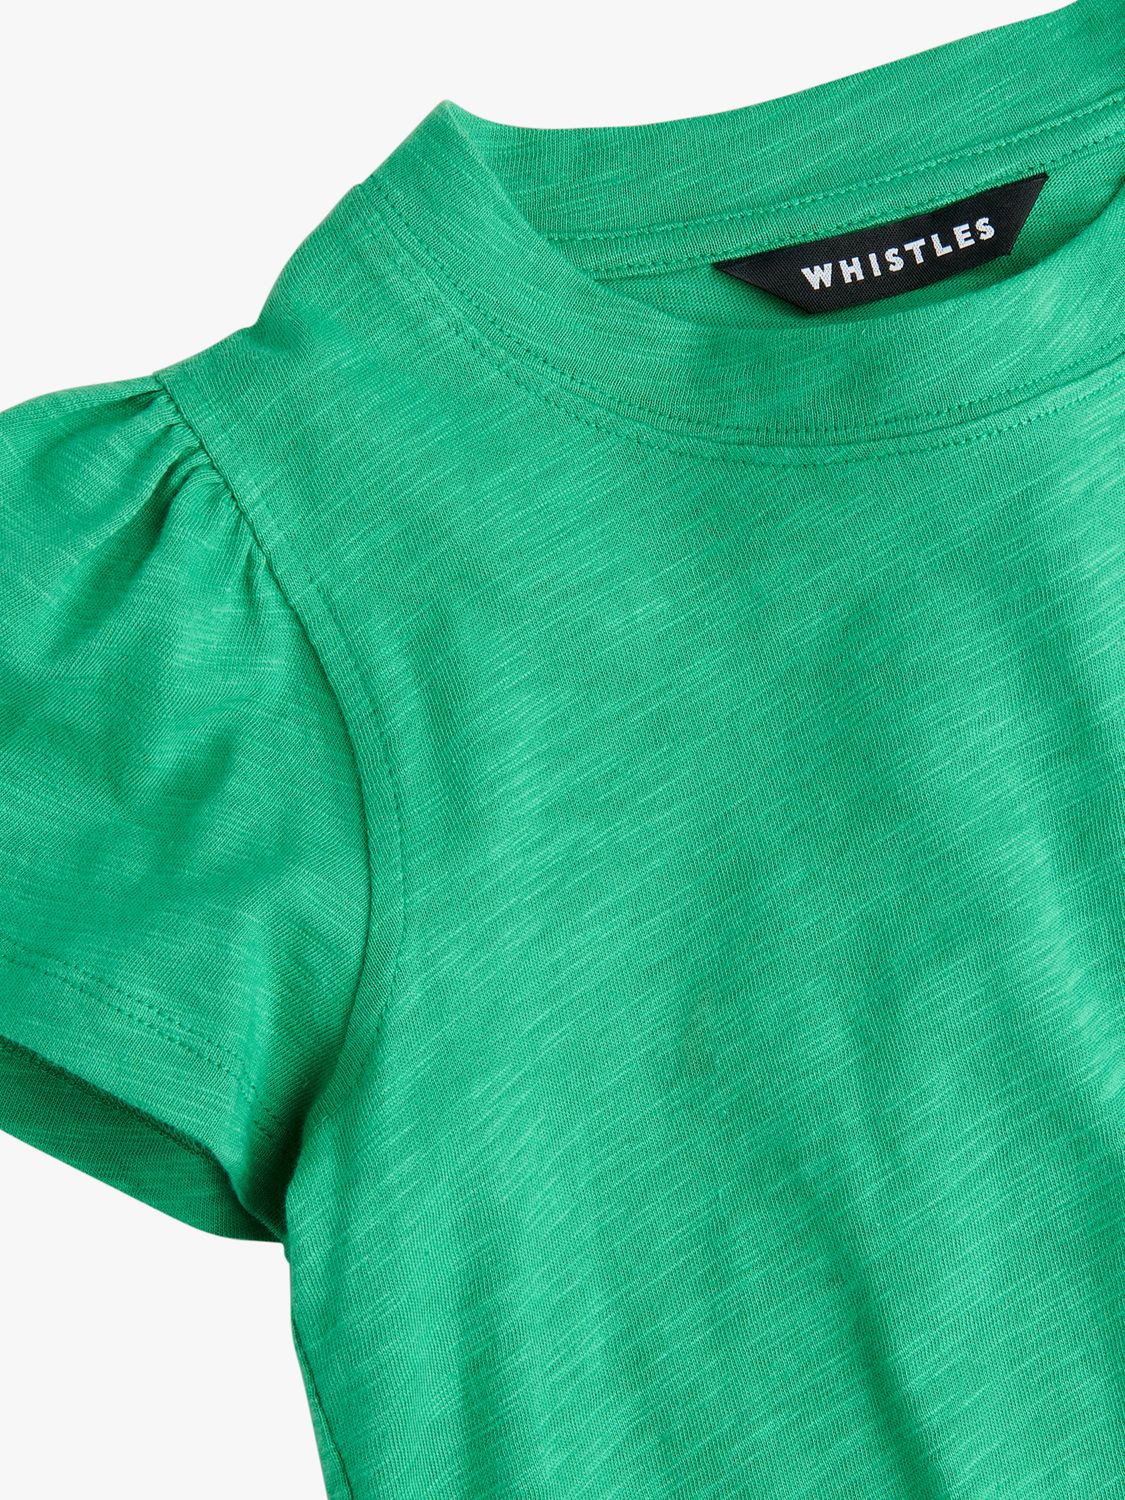 Buy Whistles Kids' Frill Sleeve Plain Top Online at johnlewis.com